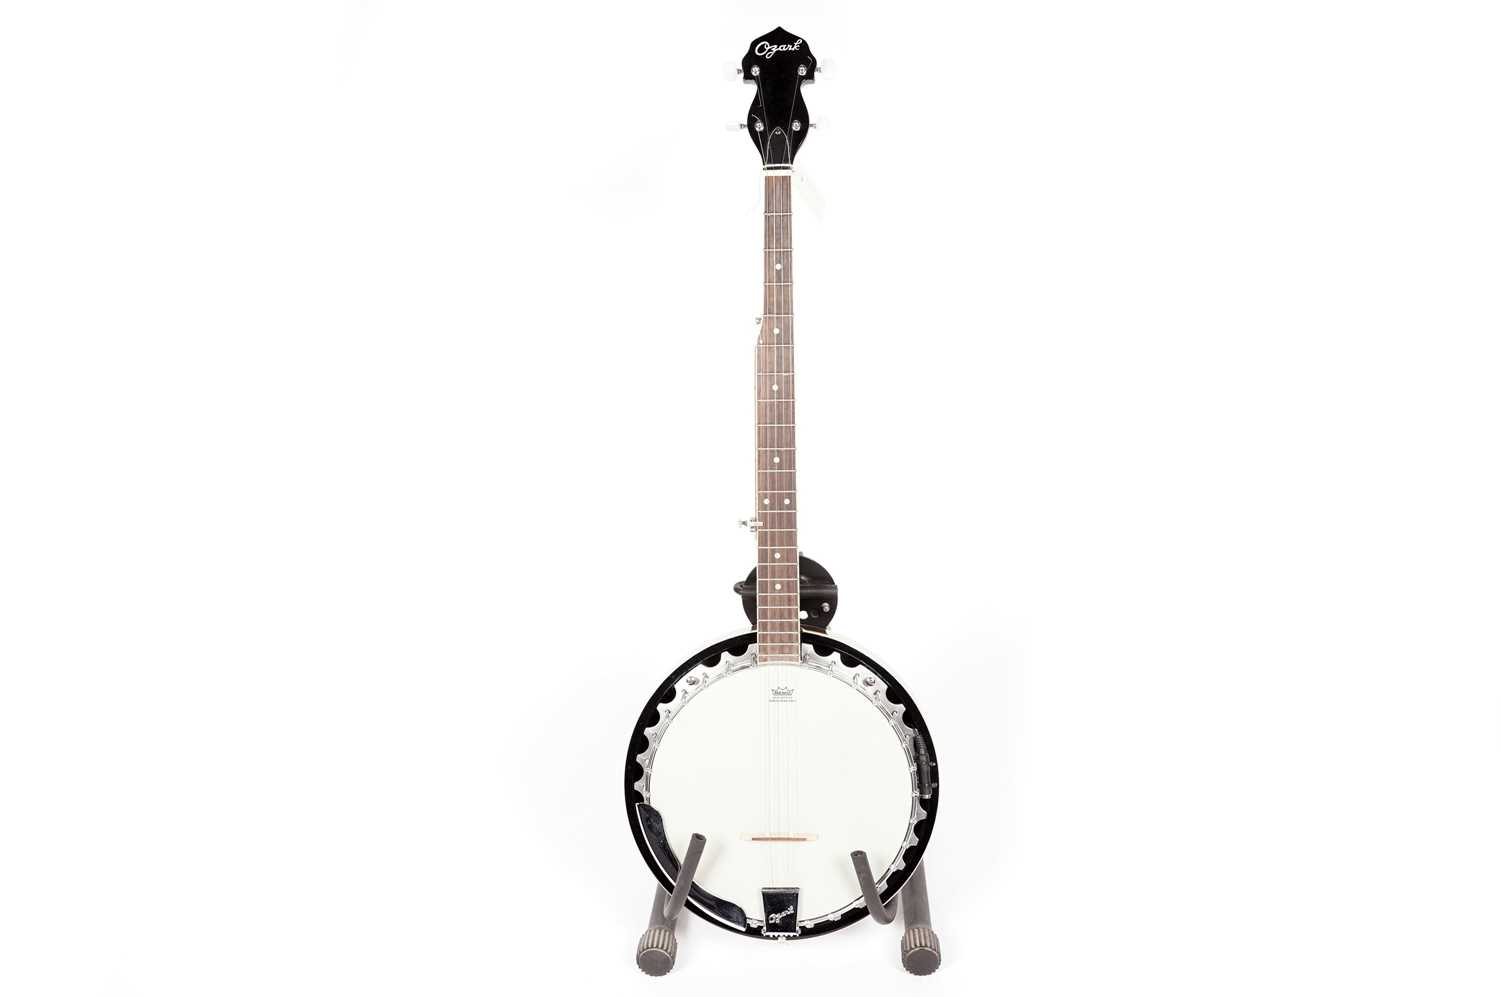 An Ozark Banjo